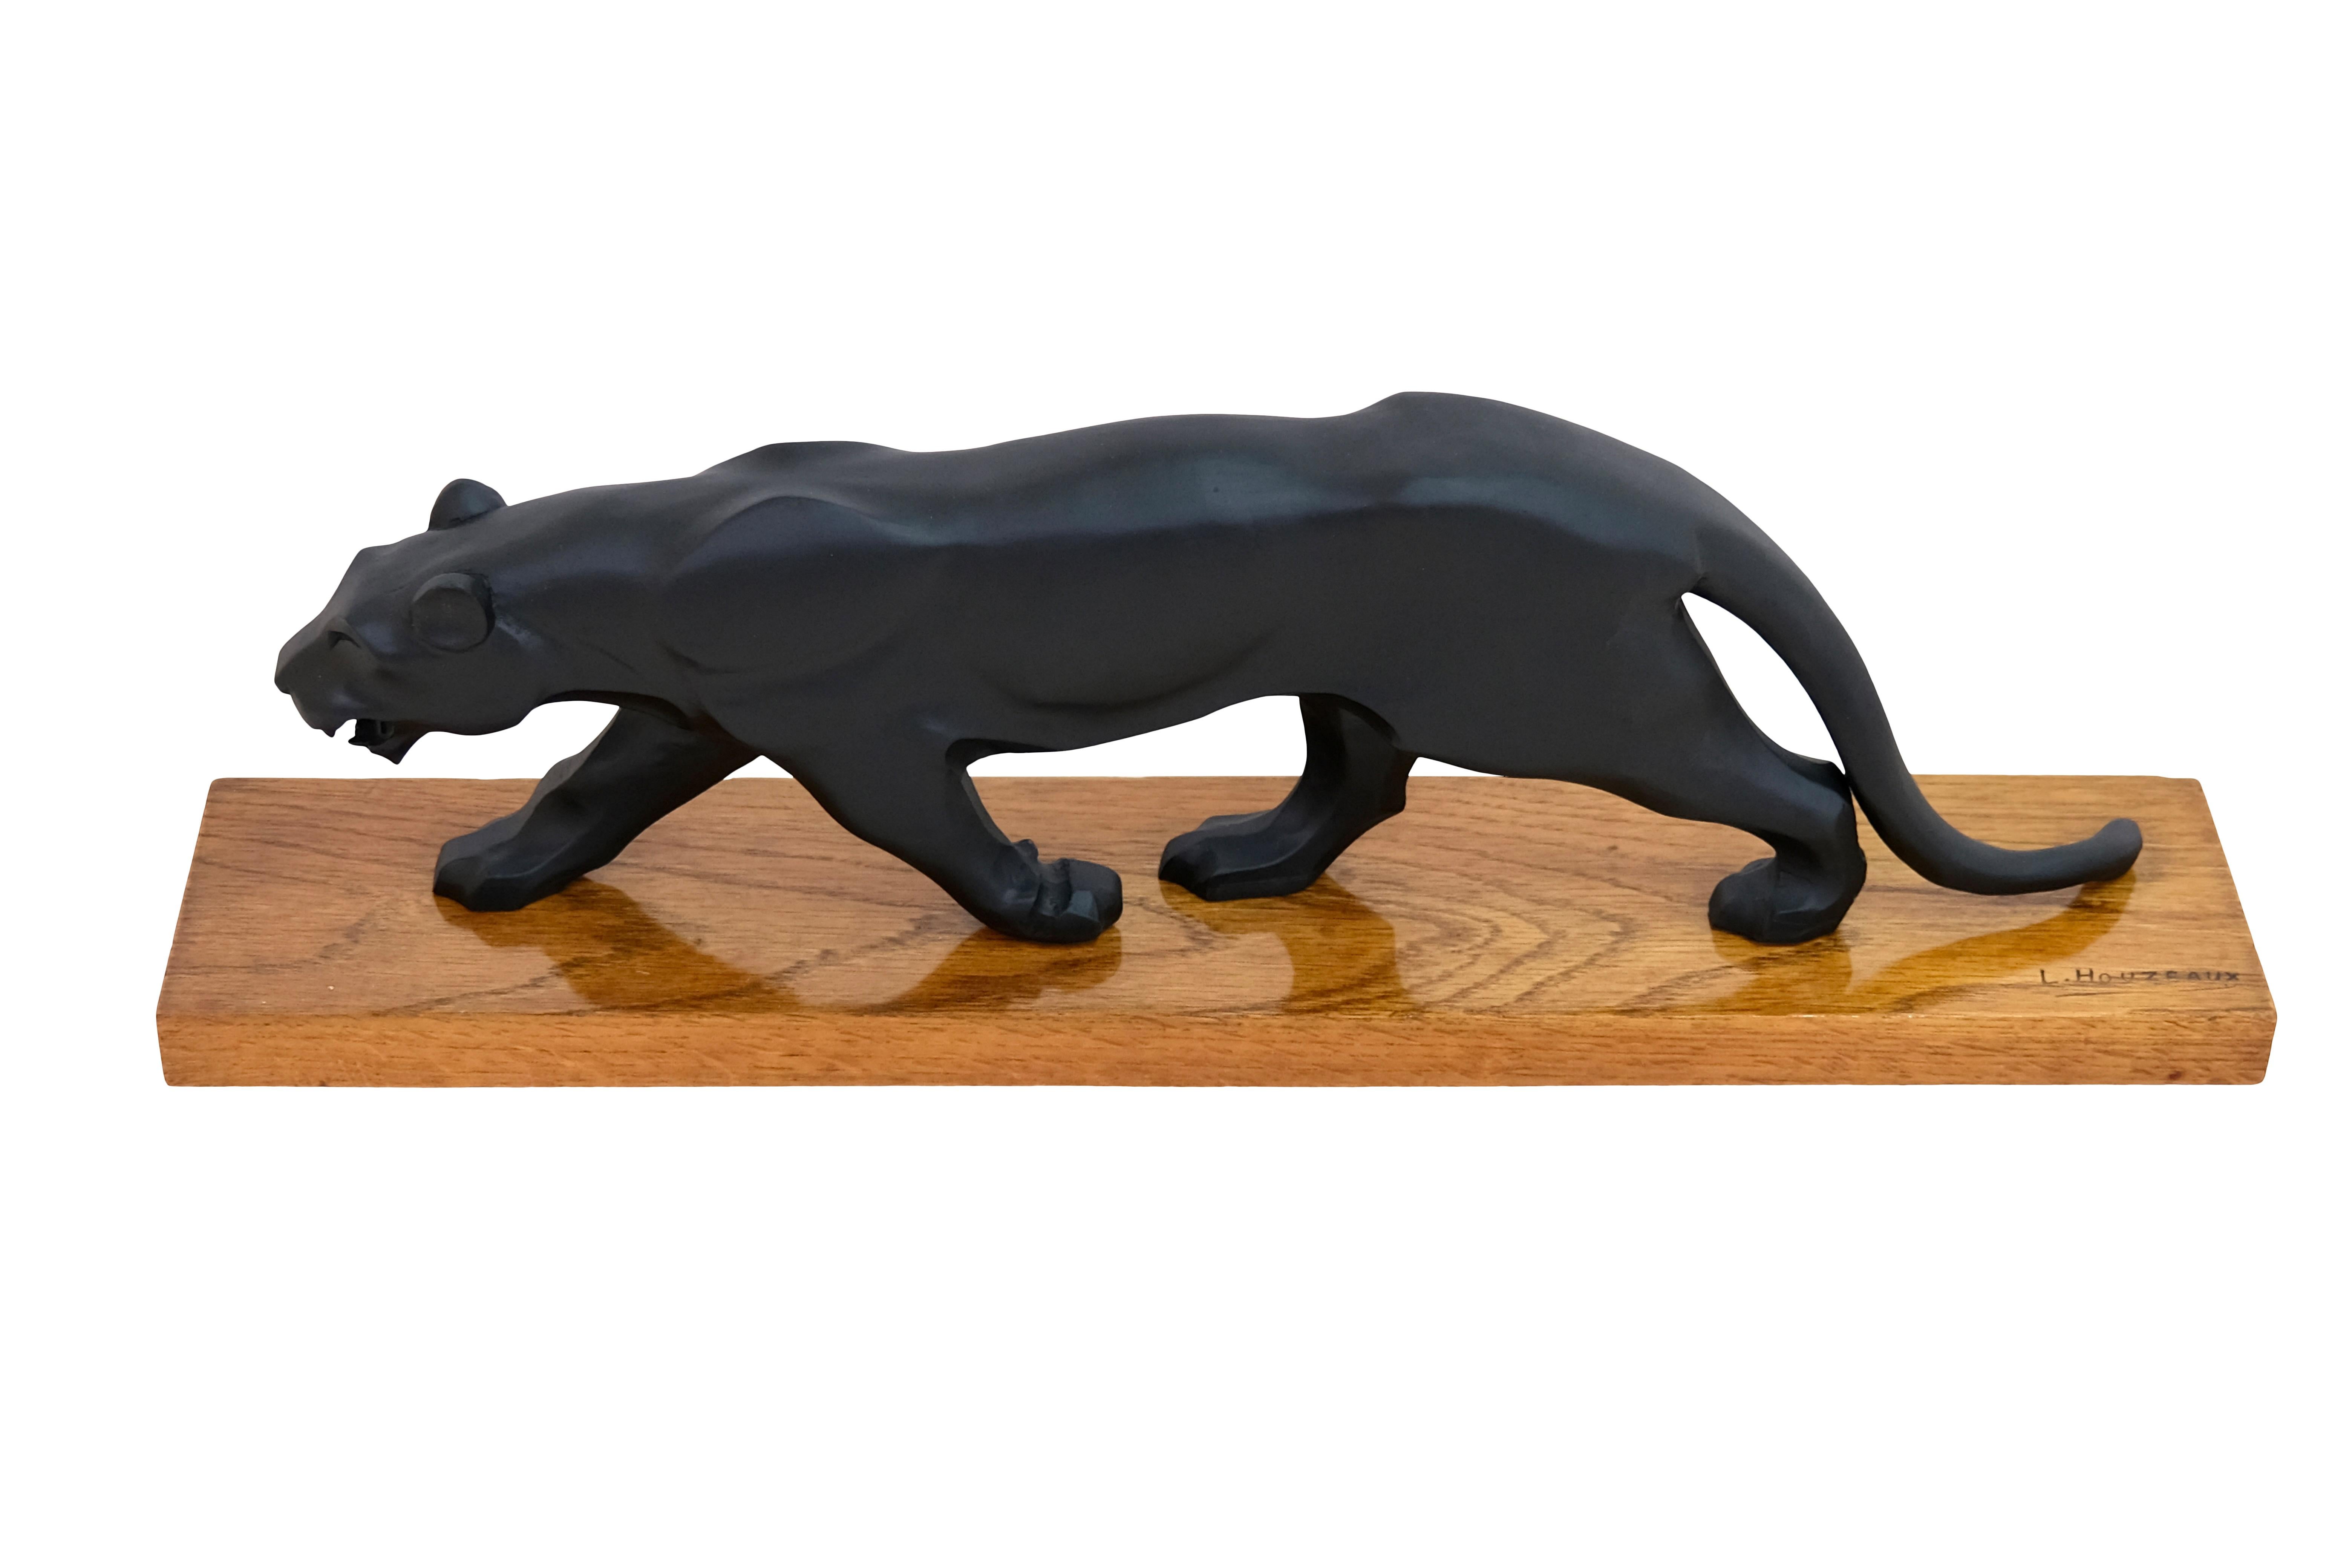 Black panther on oak base
signed L. Houzeaux

Original Art Deco, France 1930s

width: 65 cm
Height: 20 cm
Depth: 12,5 cm